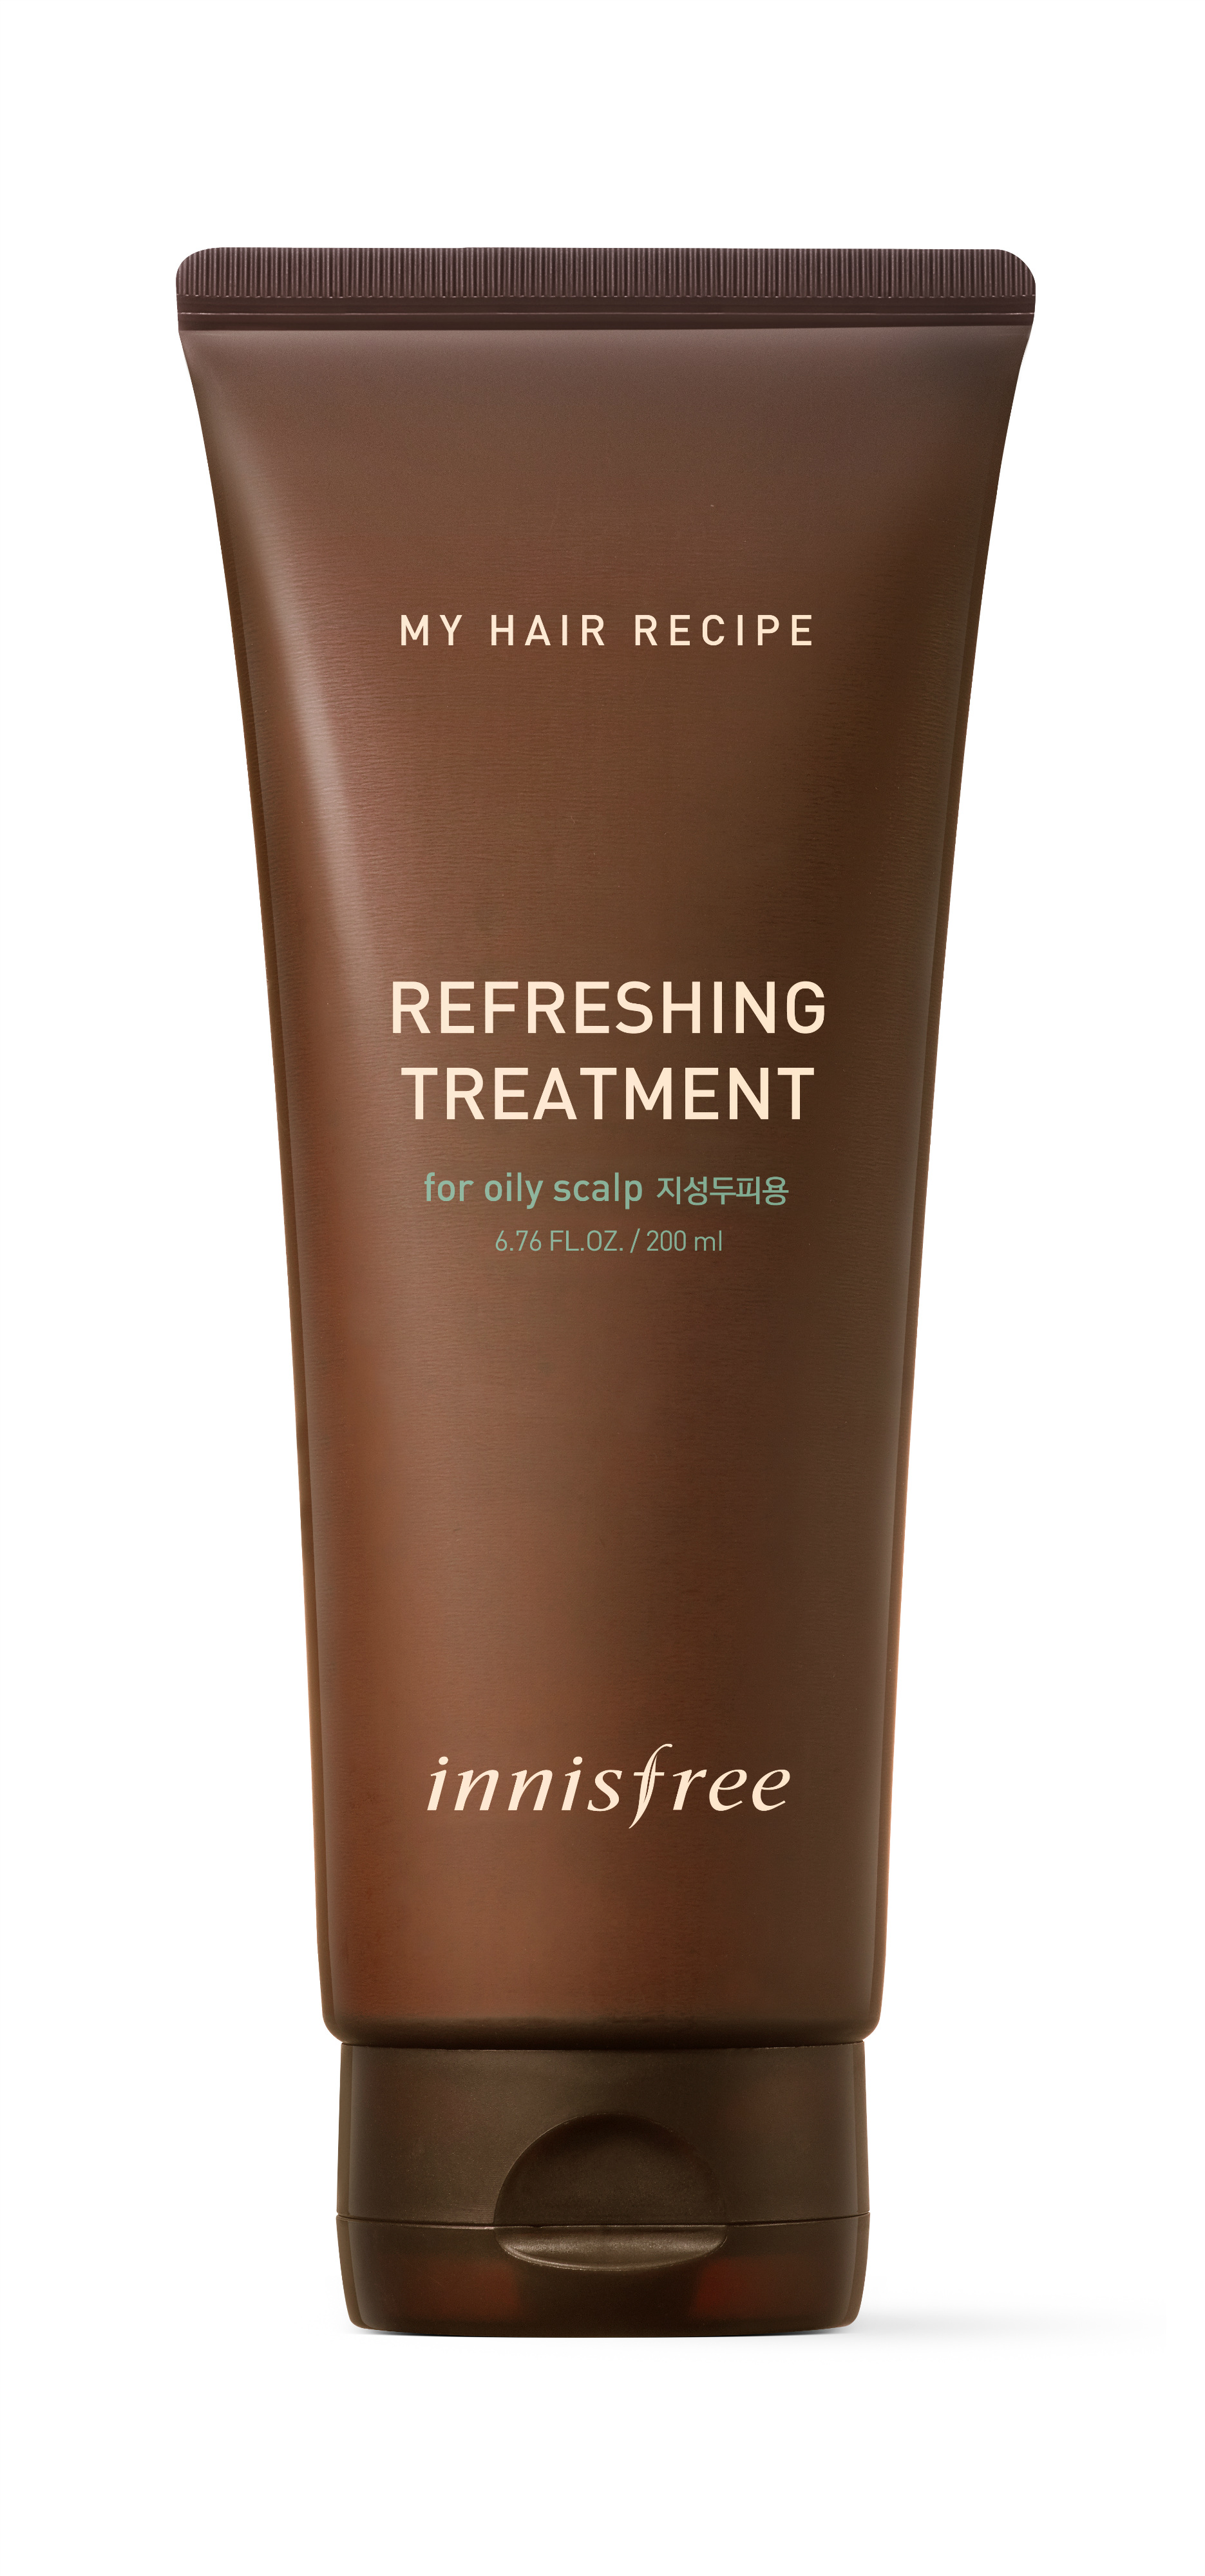 innisfree My Hair Recipe Refreshing Treatment (RM58.00/200ml)-Pamper.my